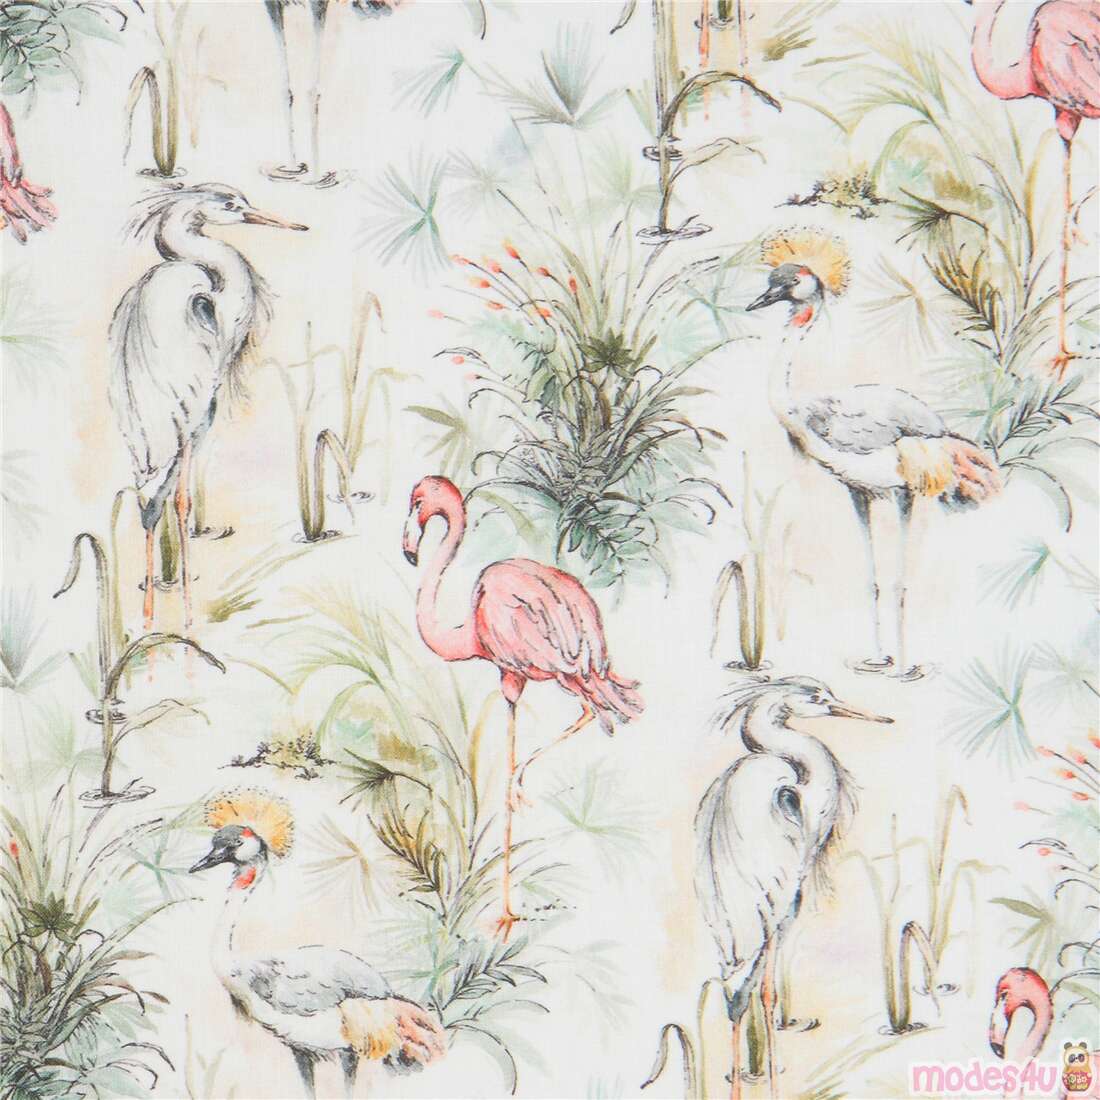 møl glæde Nyttig beige wild bird fabric with flamingos by Stof France - modeS4u